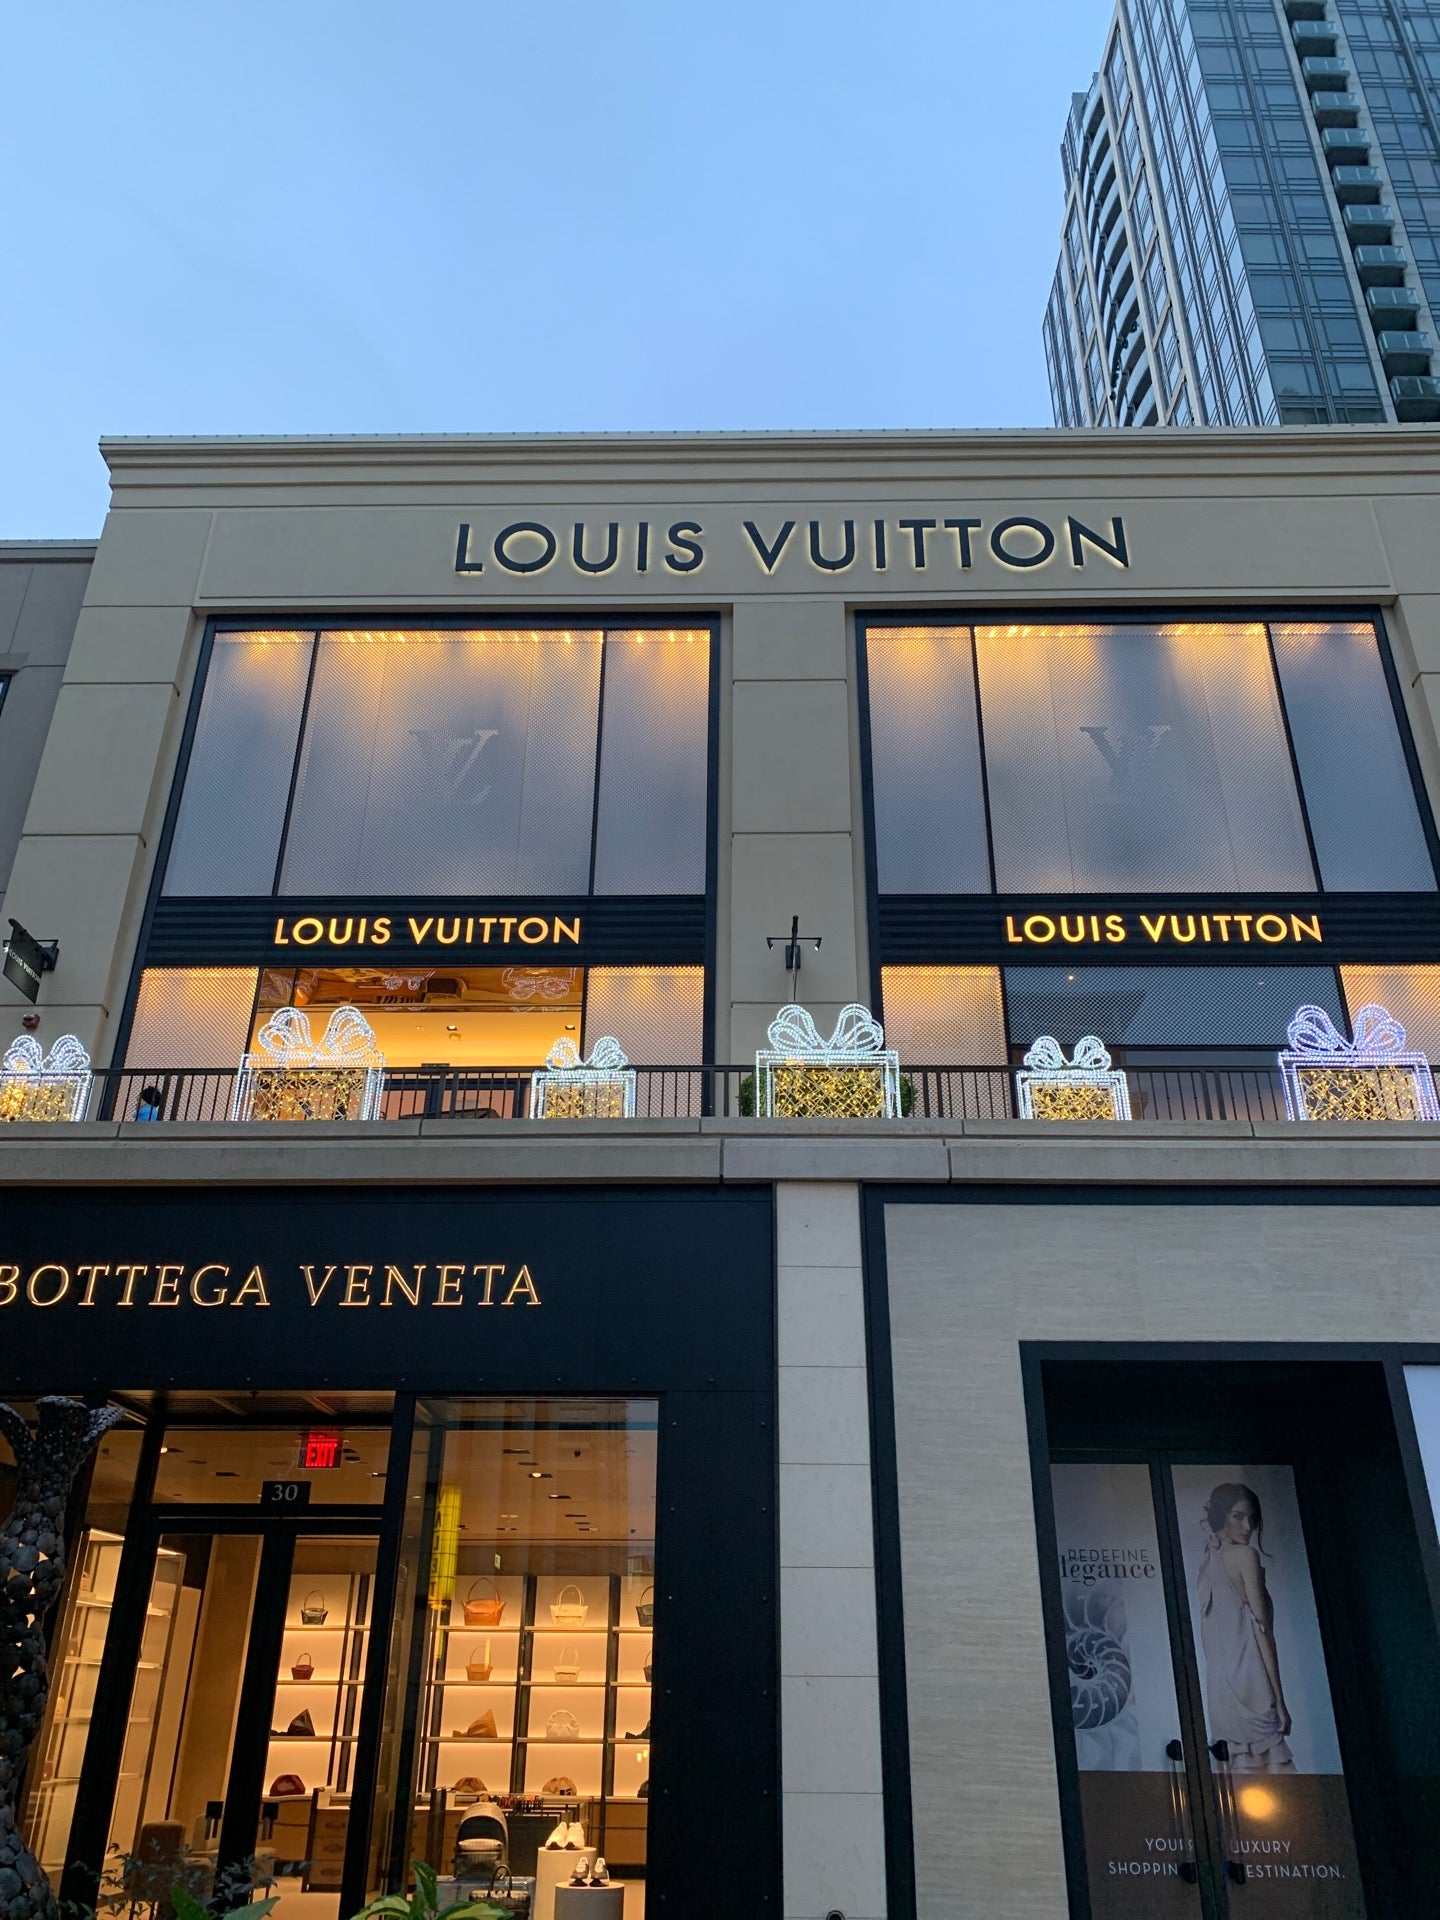 Louis Vuitton Seattle Bravern store, United States